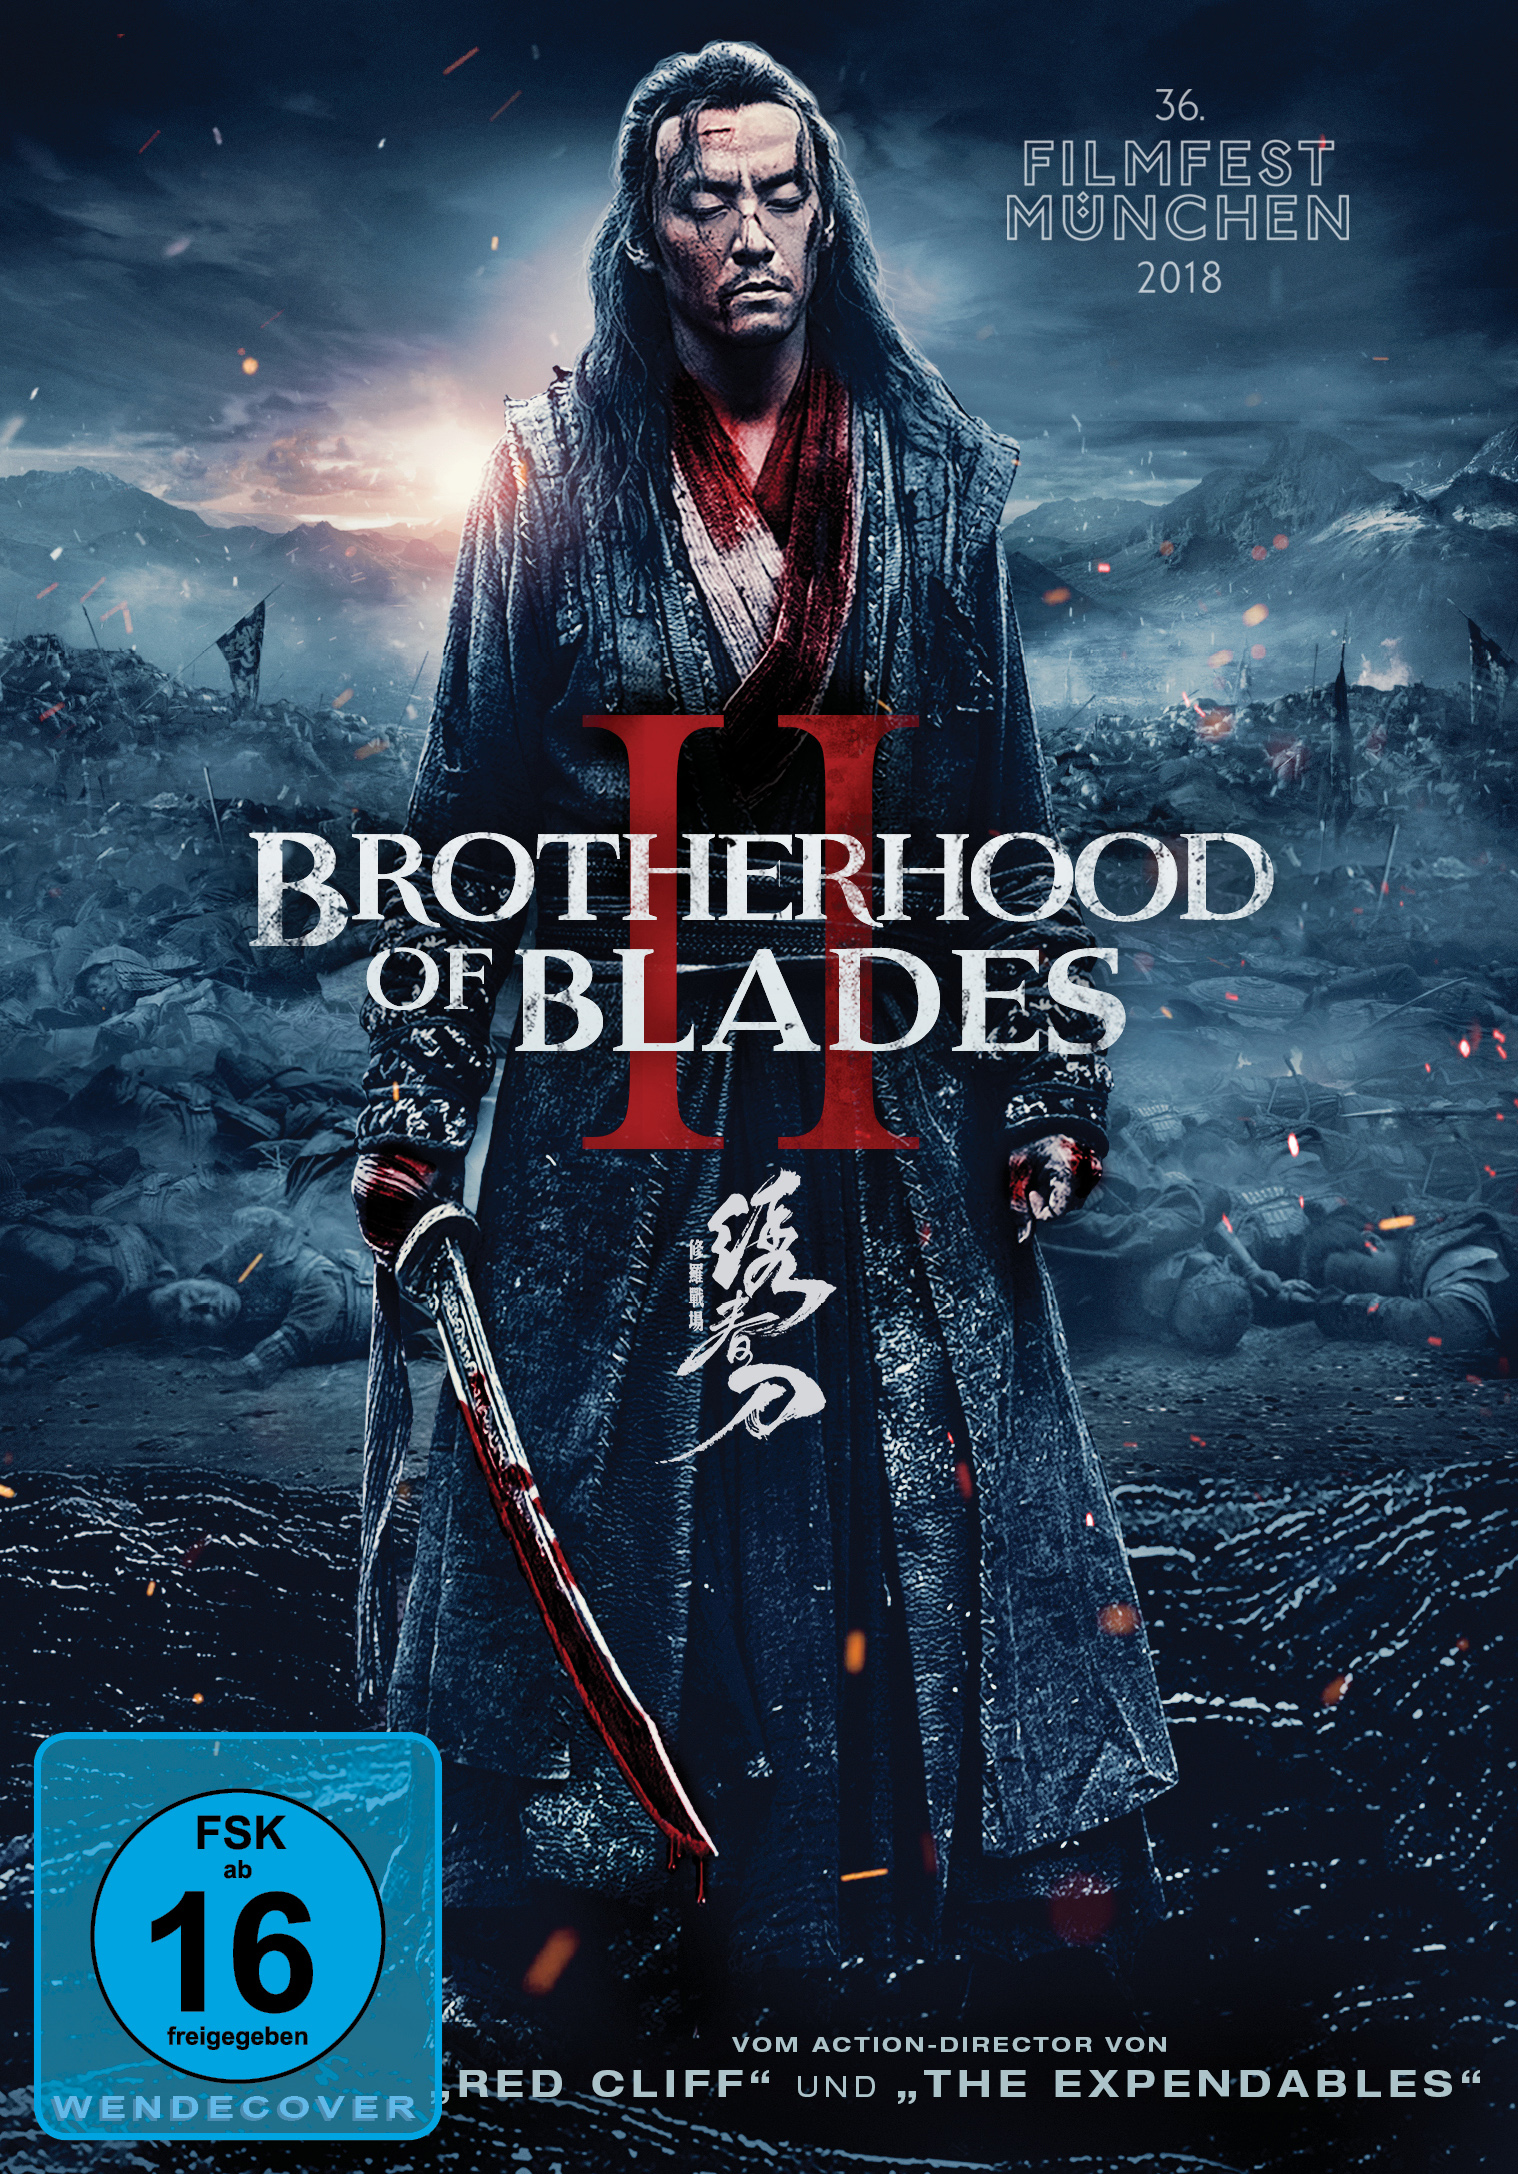 DVD Blades 2 Brotherhood Of